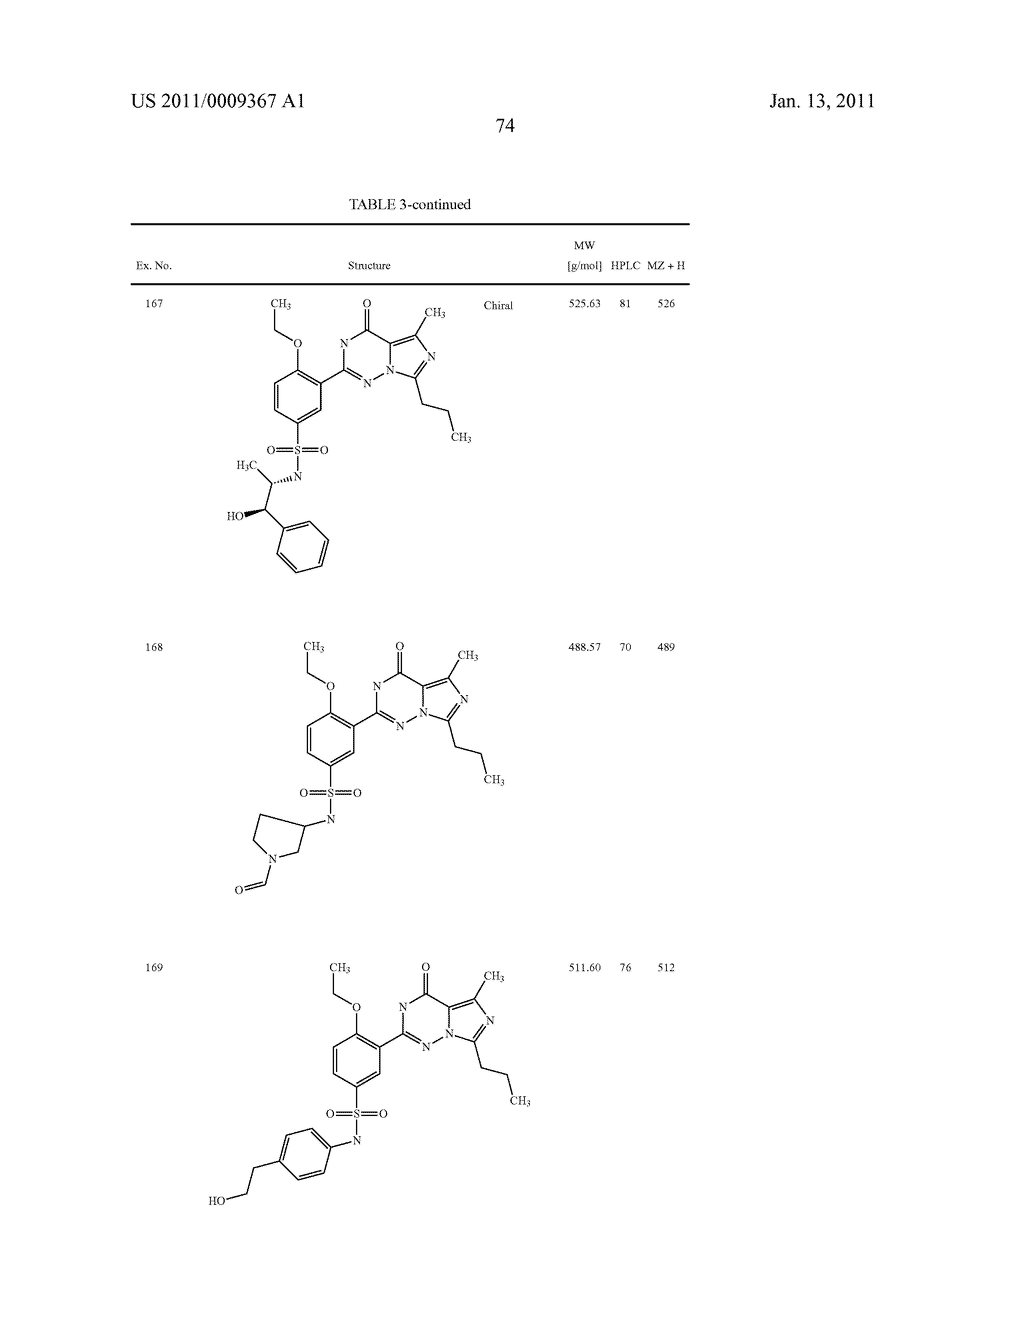 2-PHENYL SUBSTITUTED IMIDAZOTRIAZINONES AS PHOSPHODIESTERASE INHIBITORS - diagram, schematic, and image 75